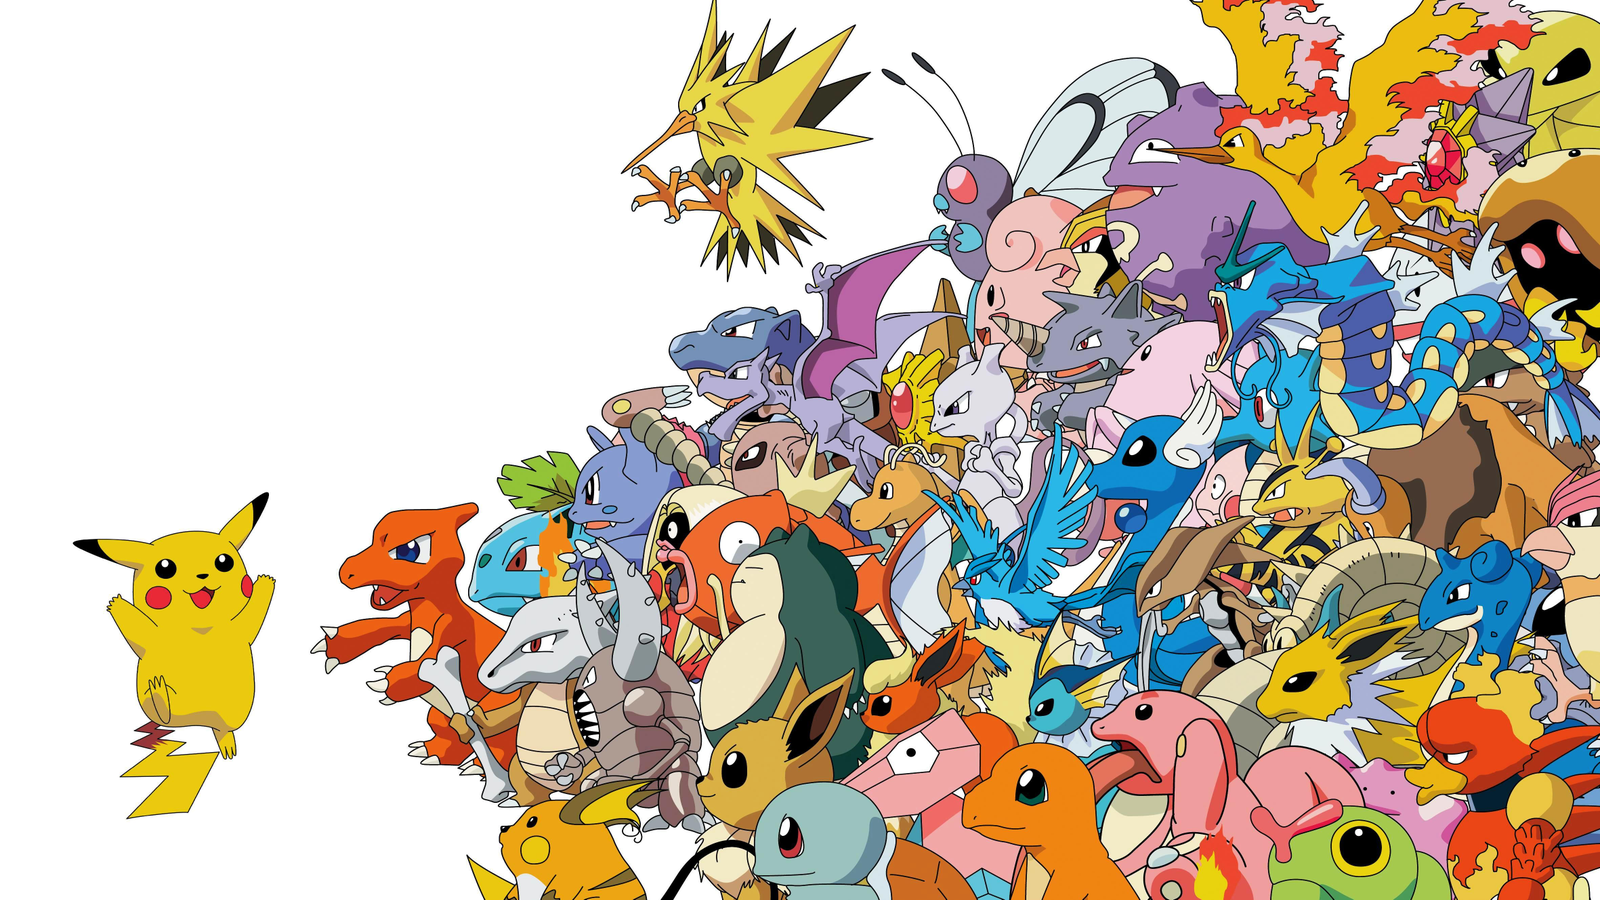 Pokémon X and Pokémon Y catch all our money! 4 million copies sold